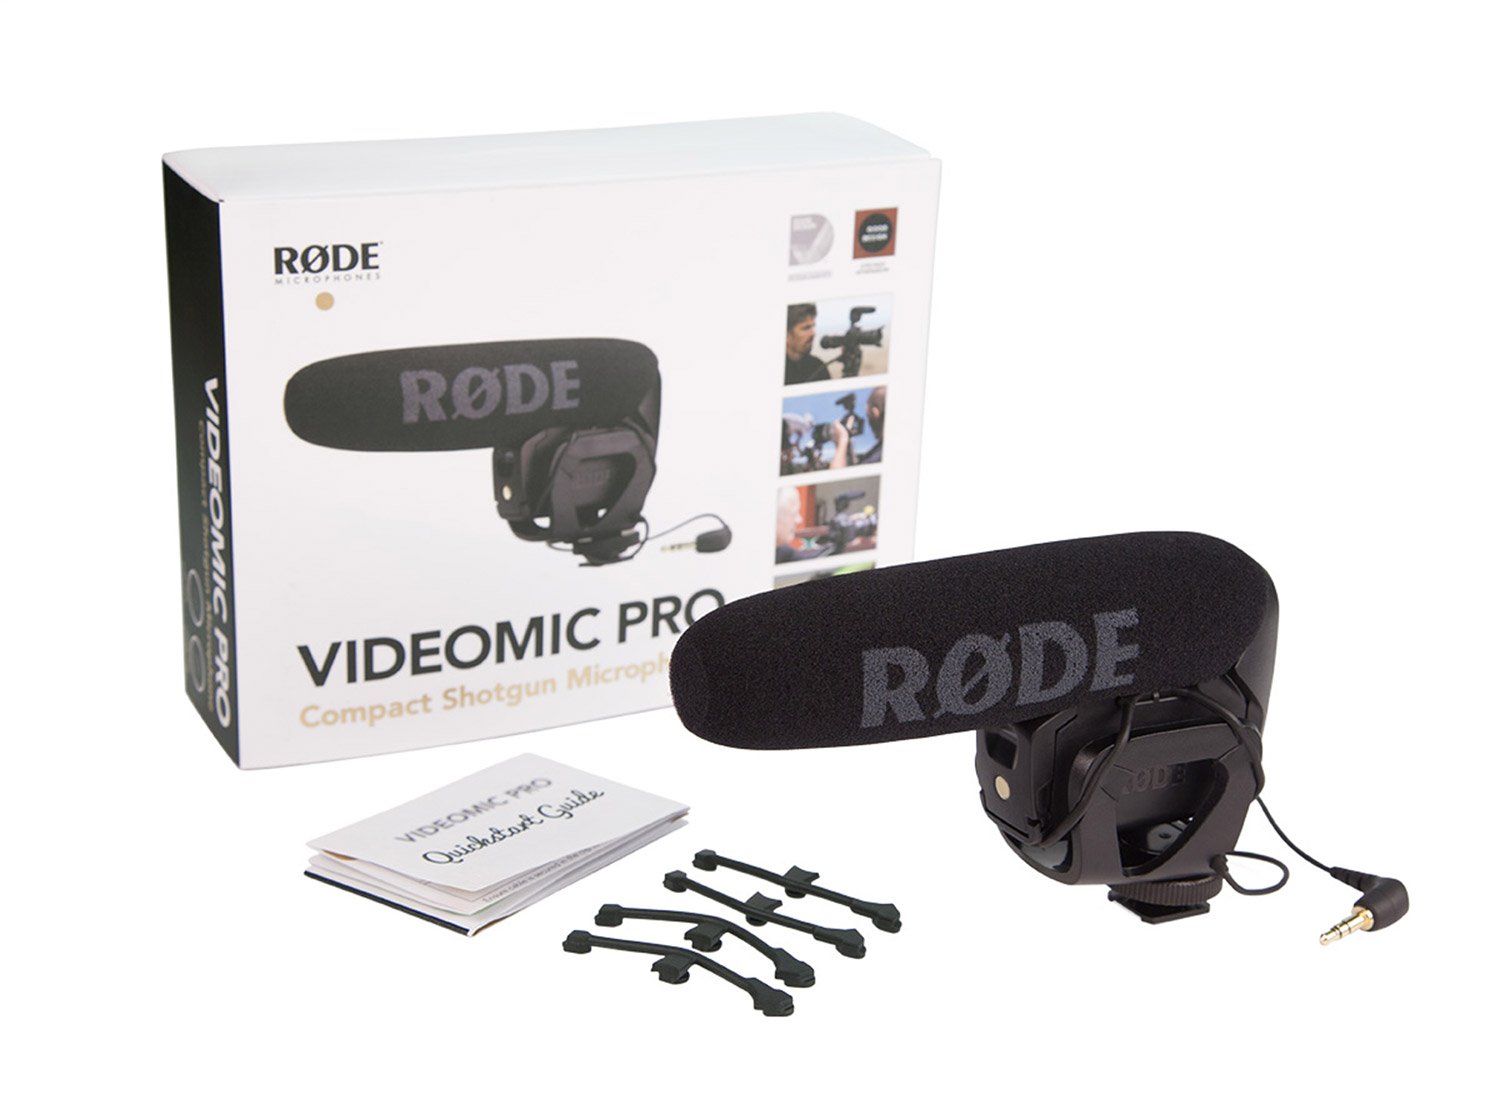    Rode VideoMic Pro